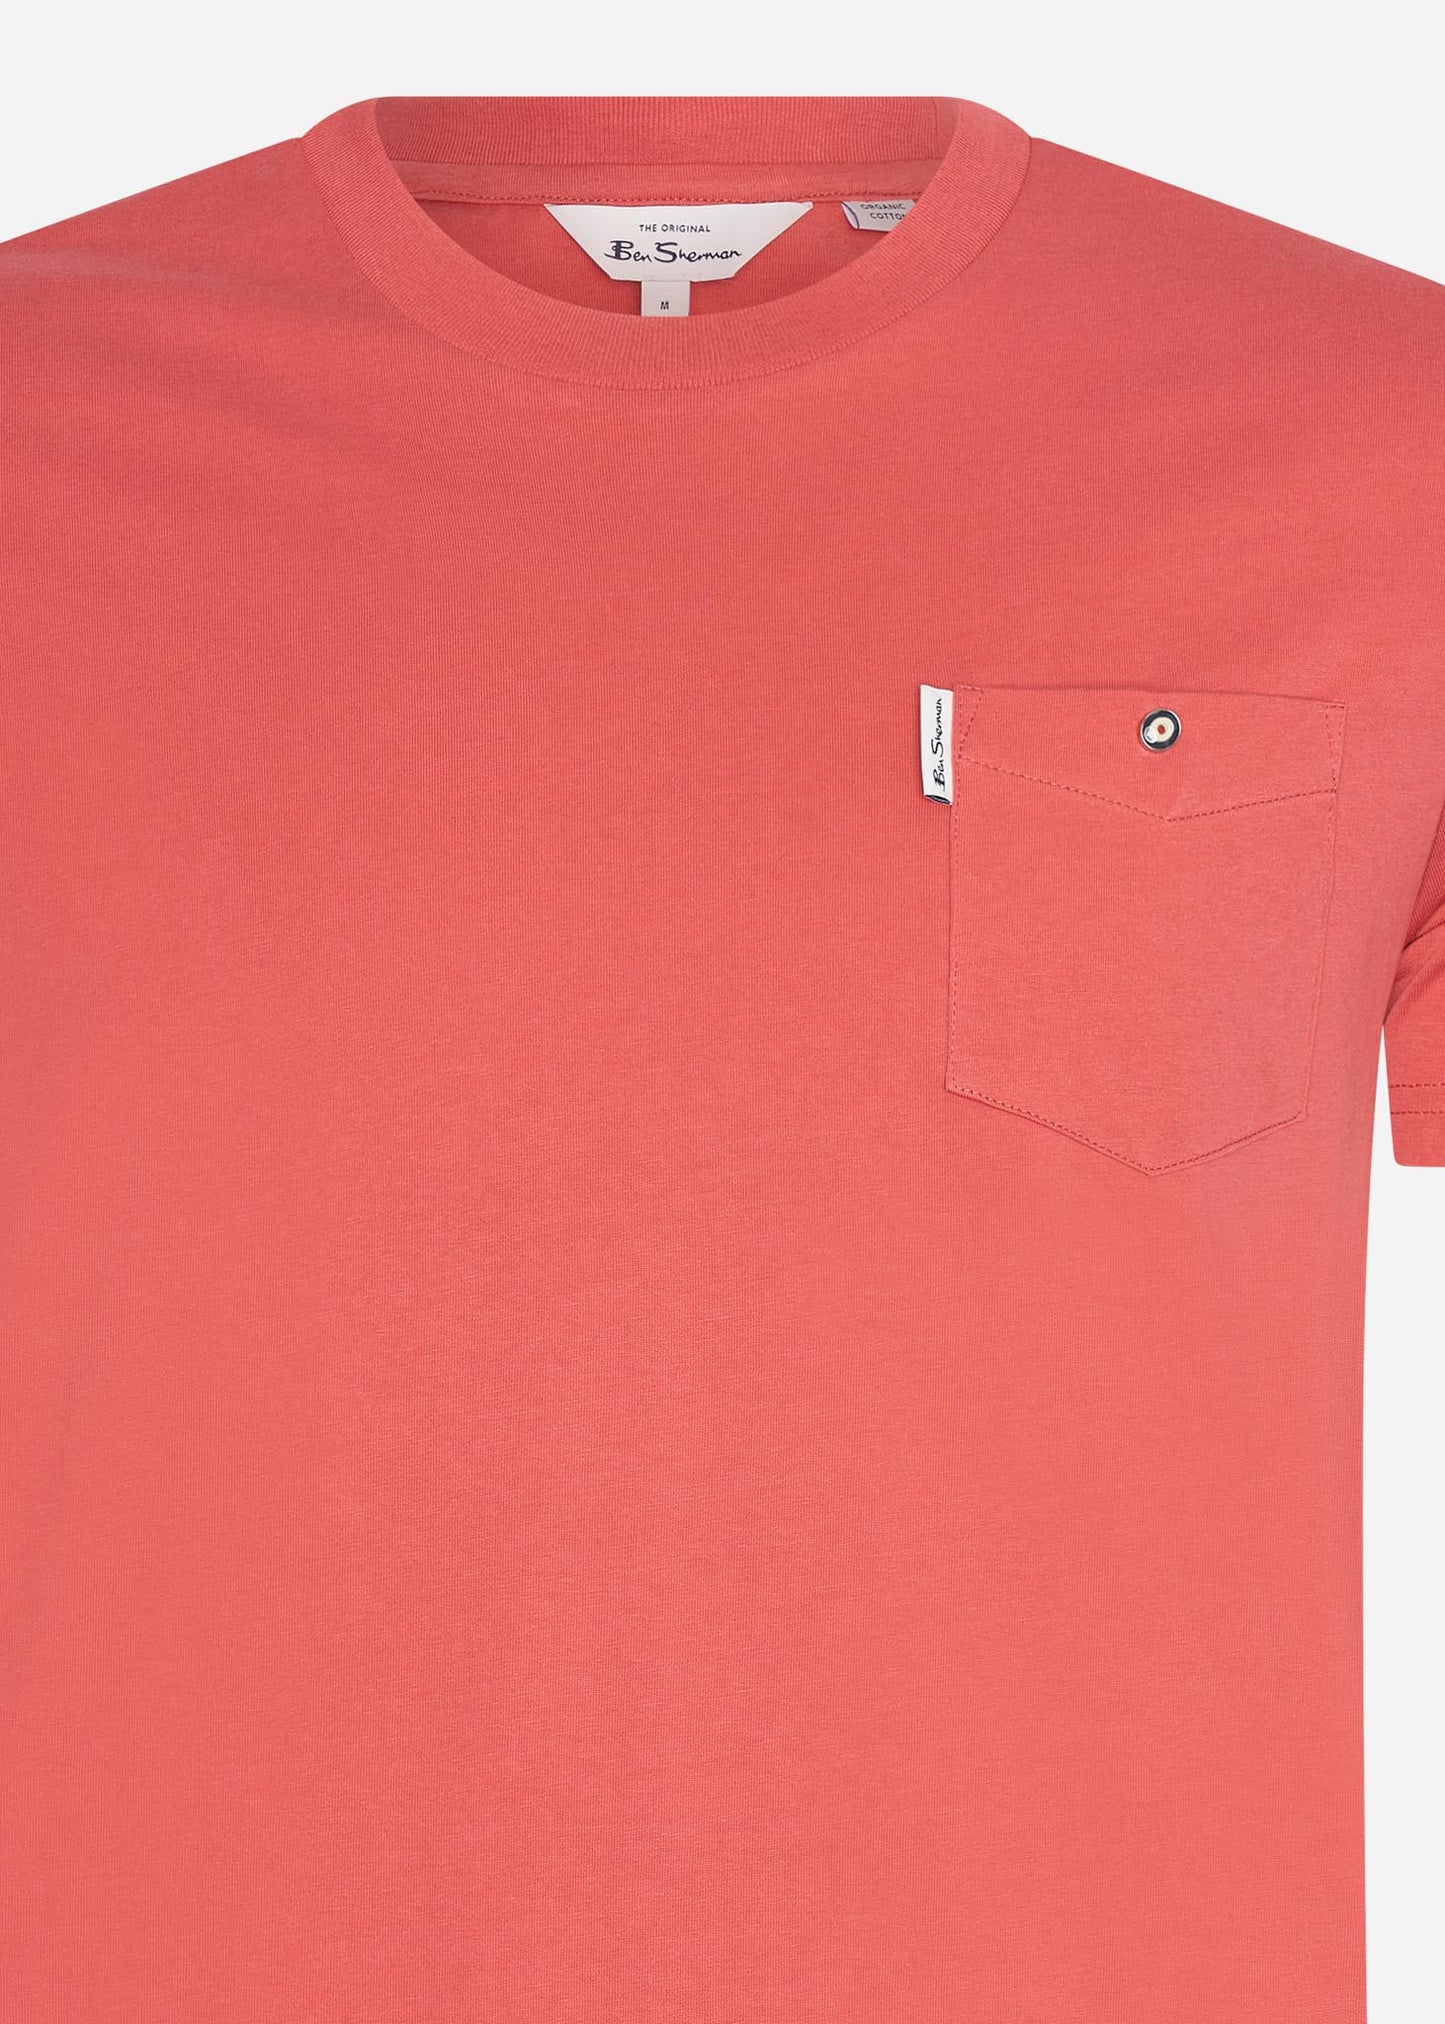 Ben Sherman T-shirts  Signature pocket tee - raspberry 